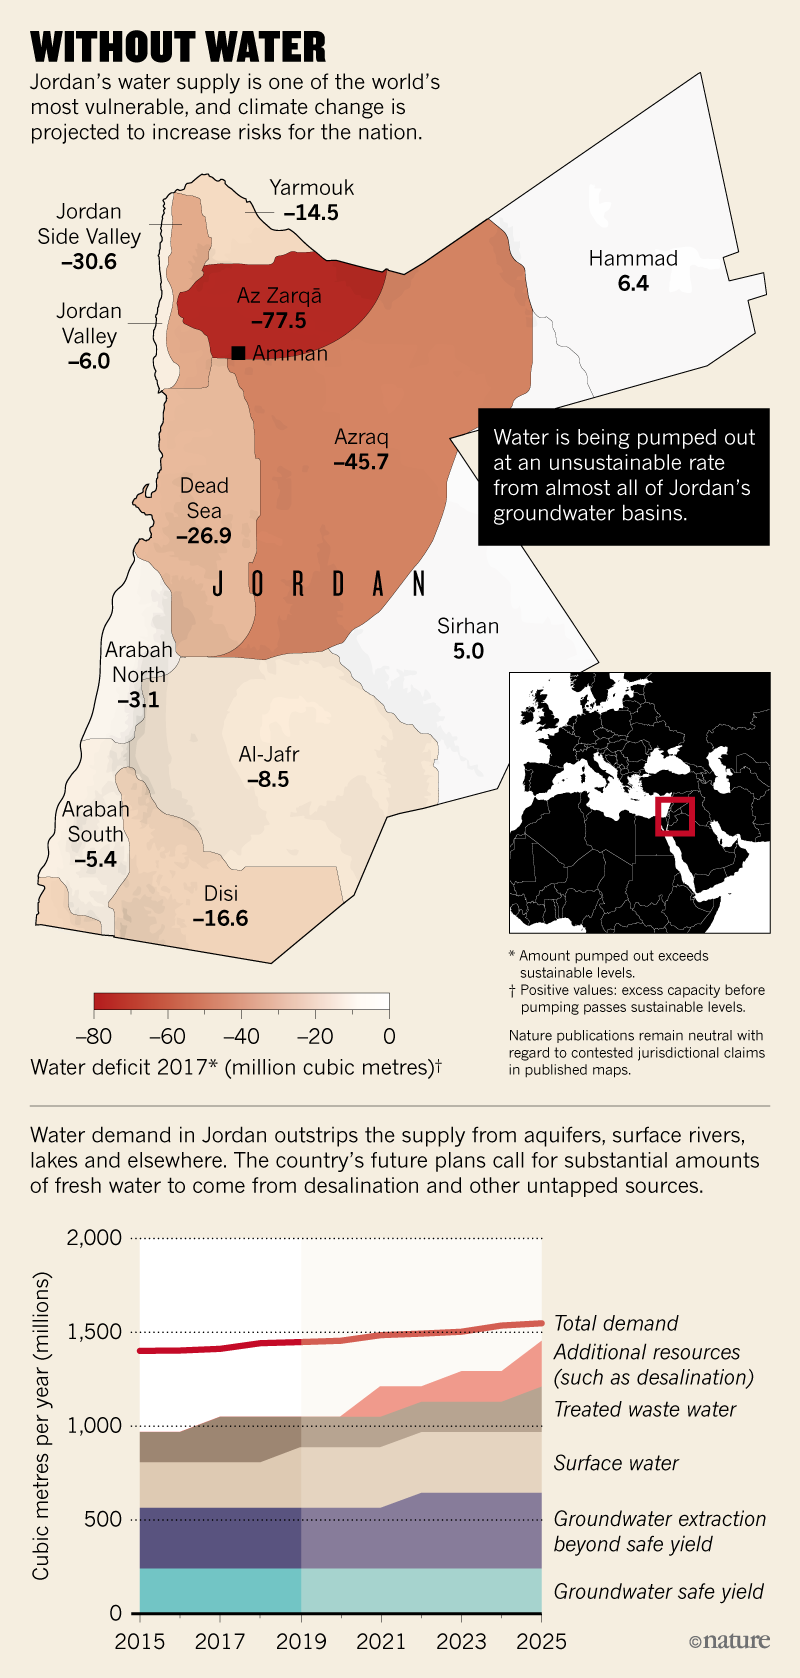 Jordan groundwater basins and water use, Nature 2019